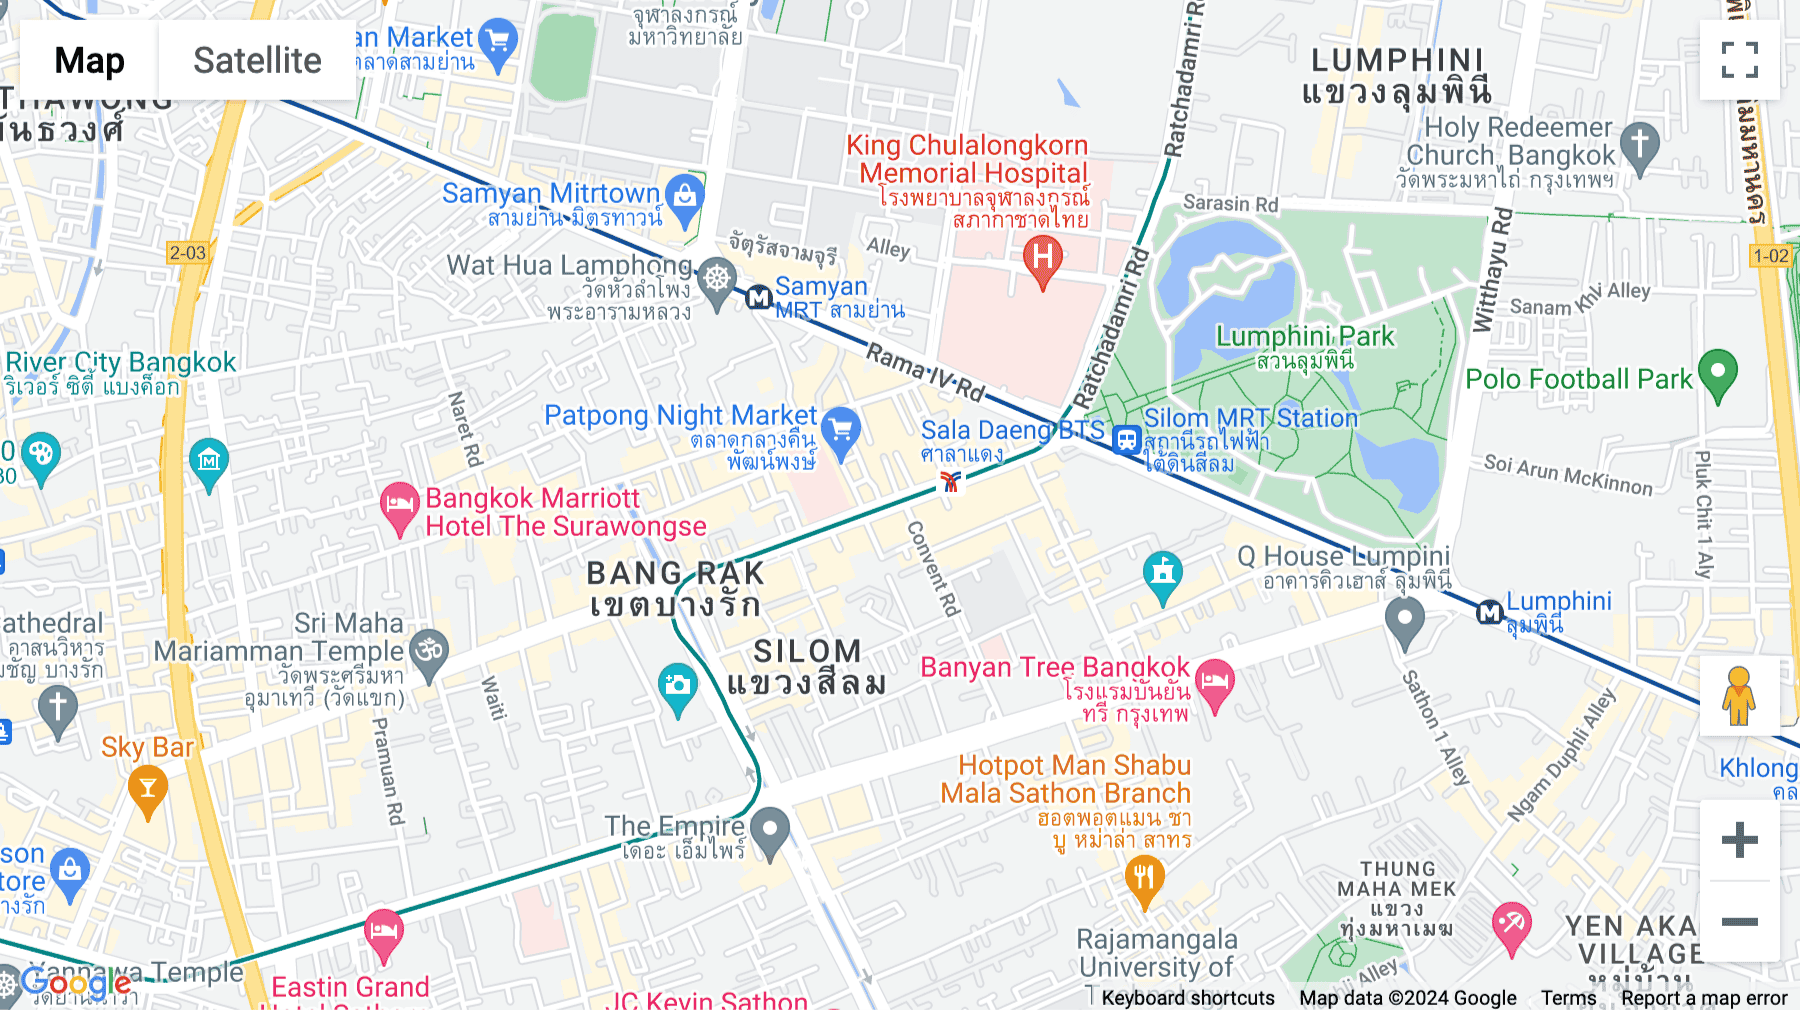 Click for interative map of 1 Convent Road, Silom, Park Silom Tower, Level 29 & 30, Bangkok